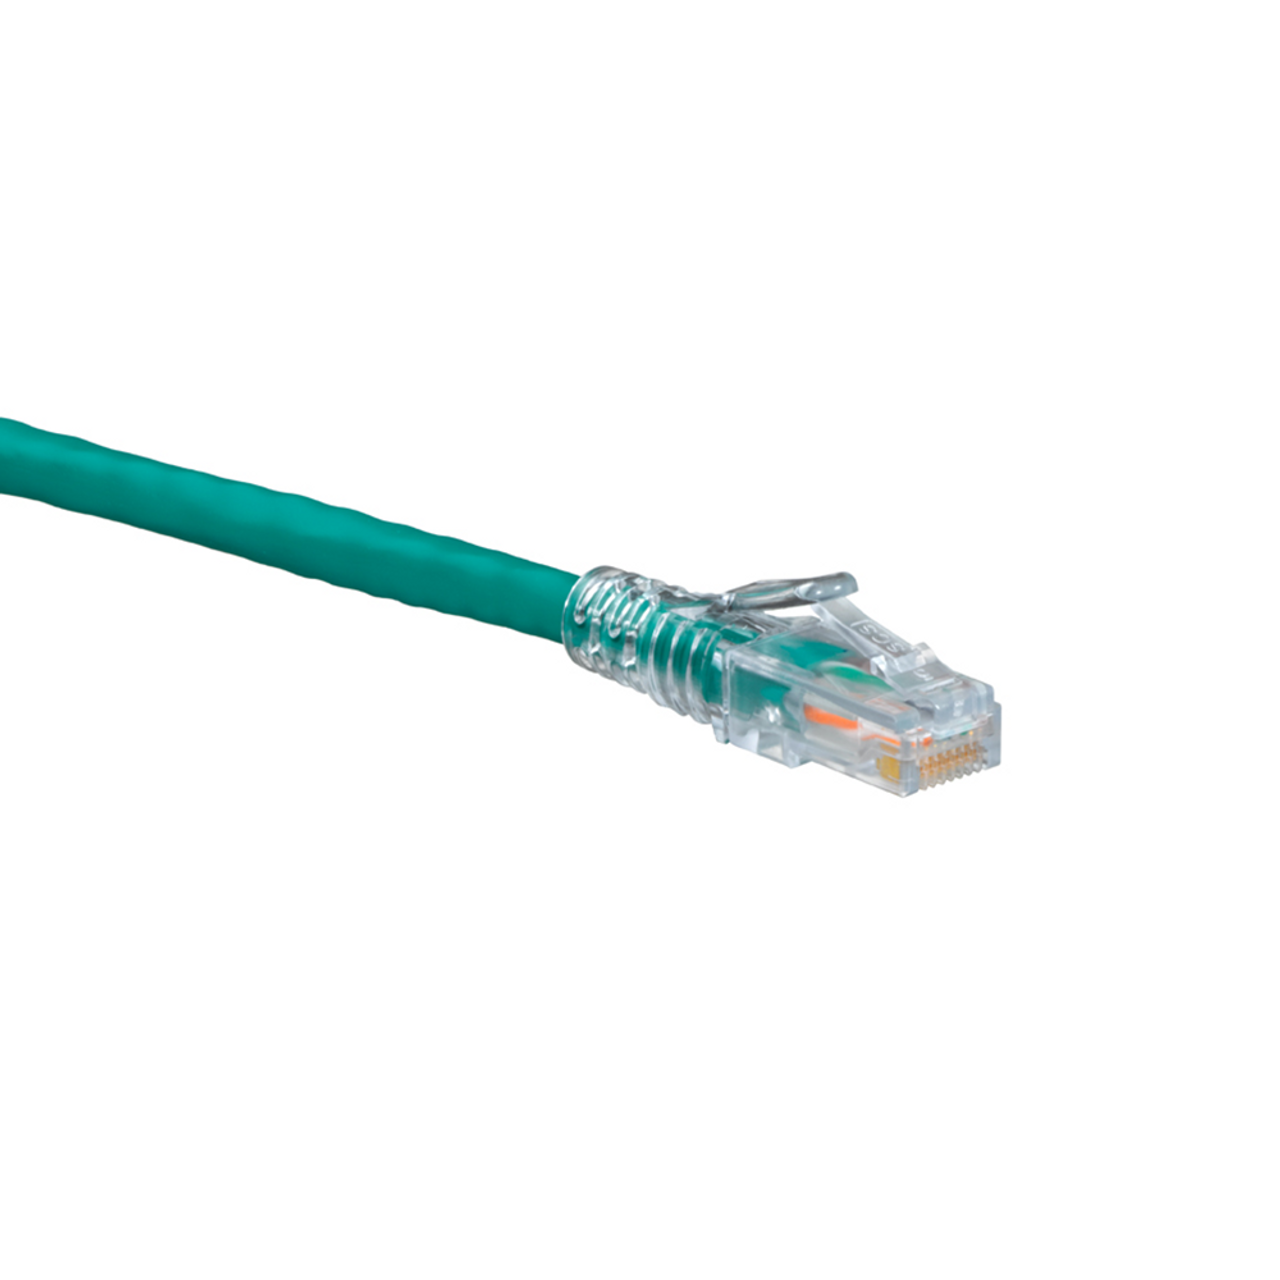 Leviton WIRLC-CFP LumaCAN Cable, Configured Length for 1-1000 Feet, GreenMAX DRC, RJ45, 23AWGB, Plenum (WIRLC-CFP-1-)